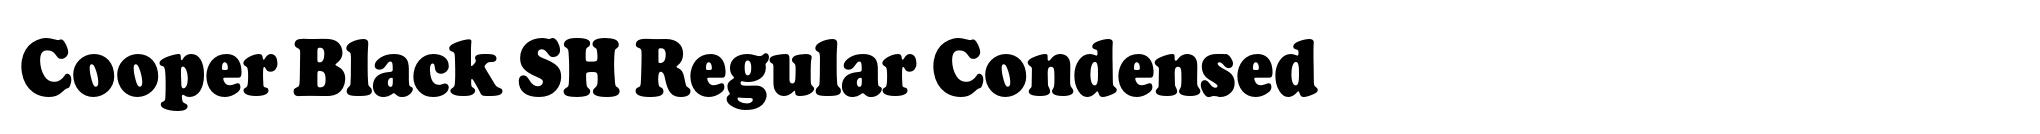 Cooper Black SH Regular Condensed image